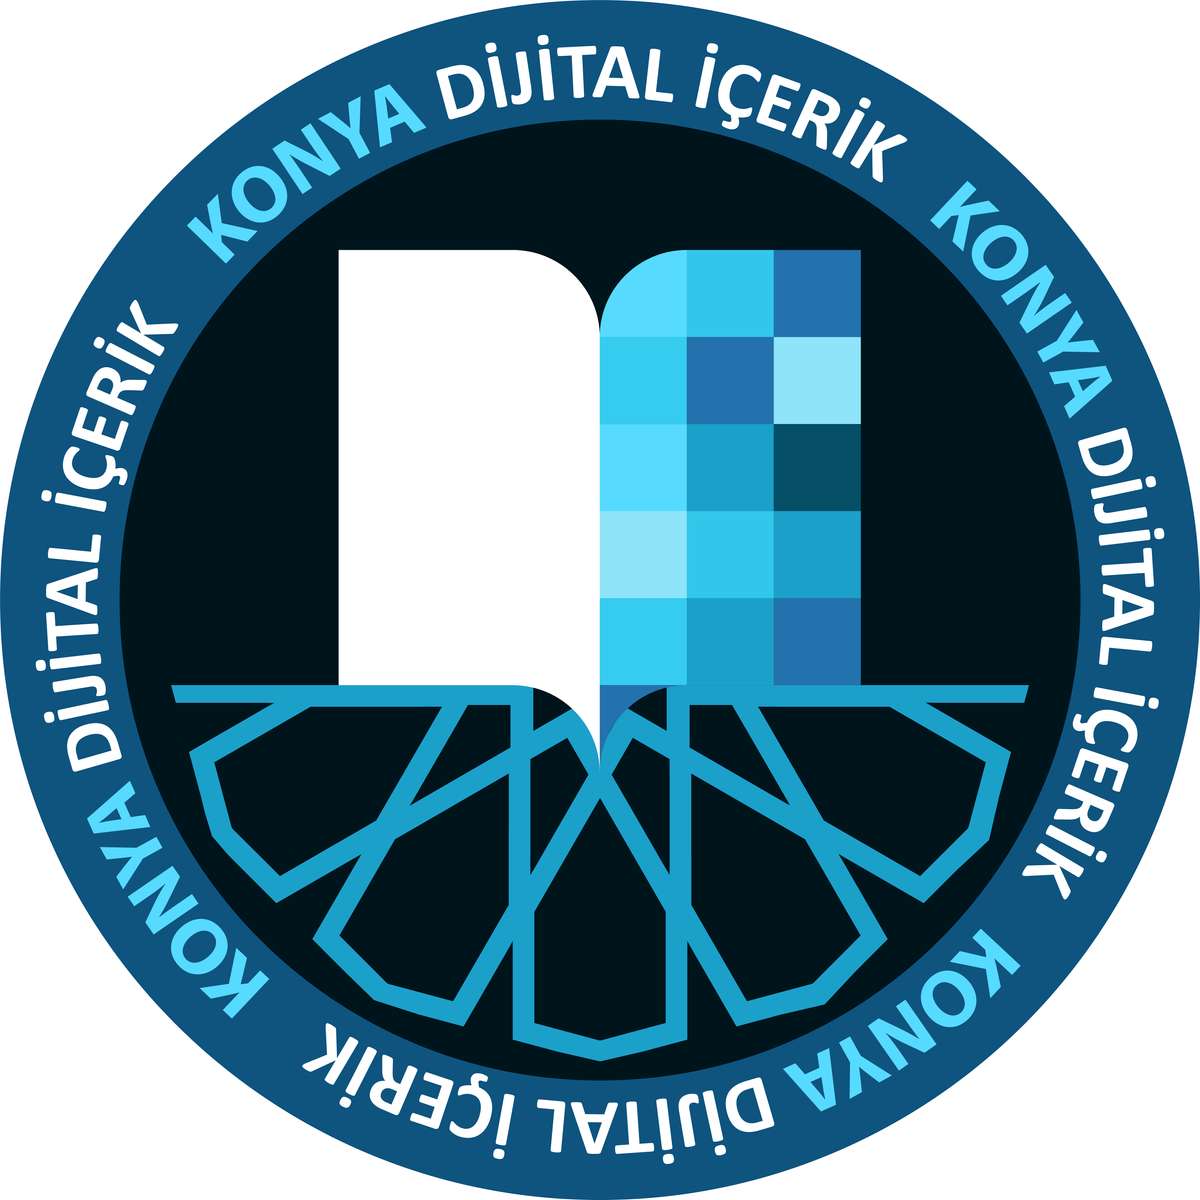 Konya Dijital Içerik rompecabezas en línea